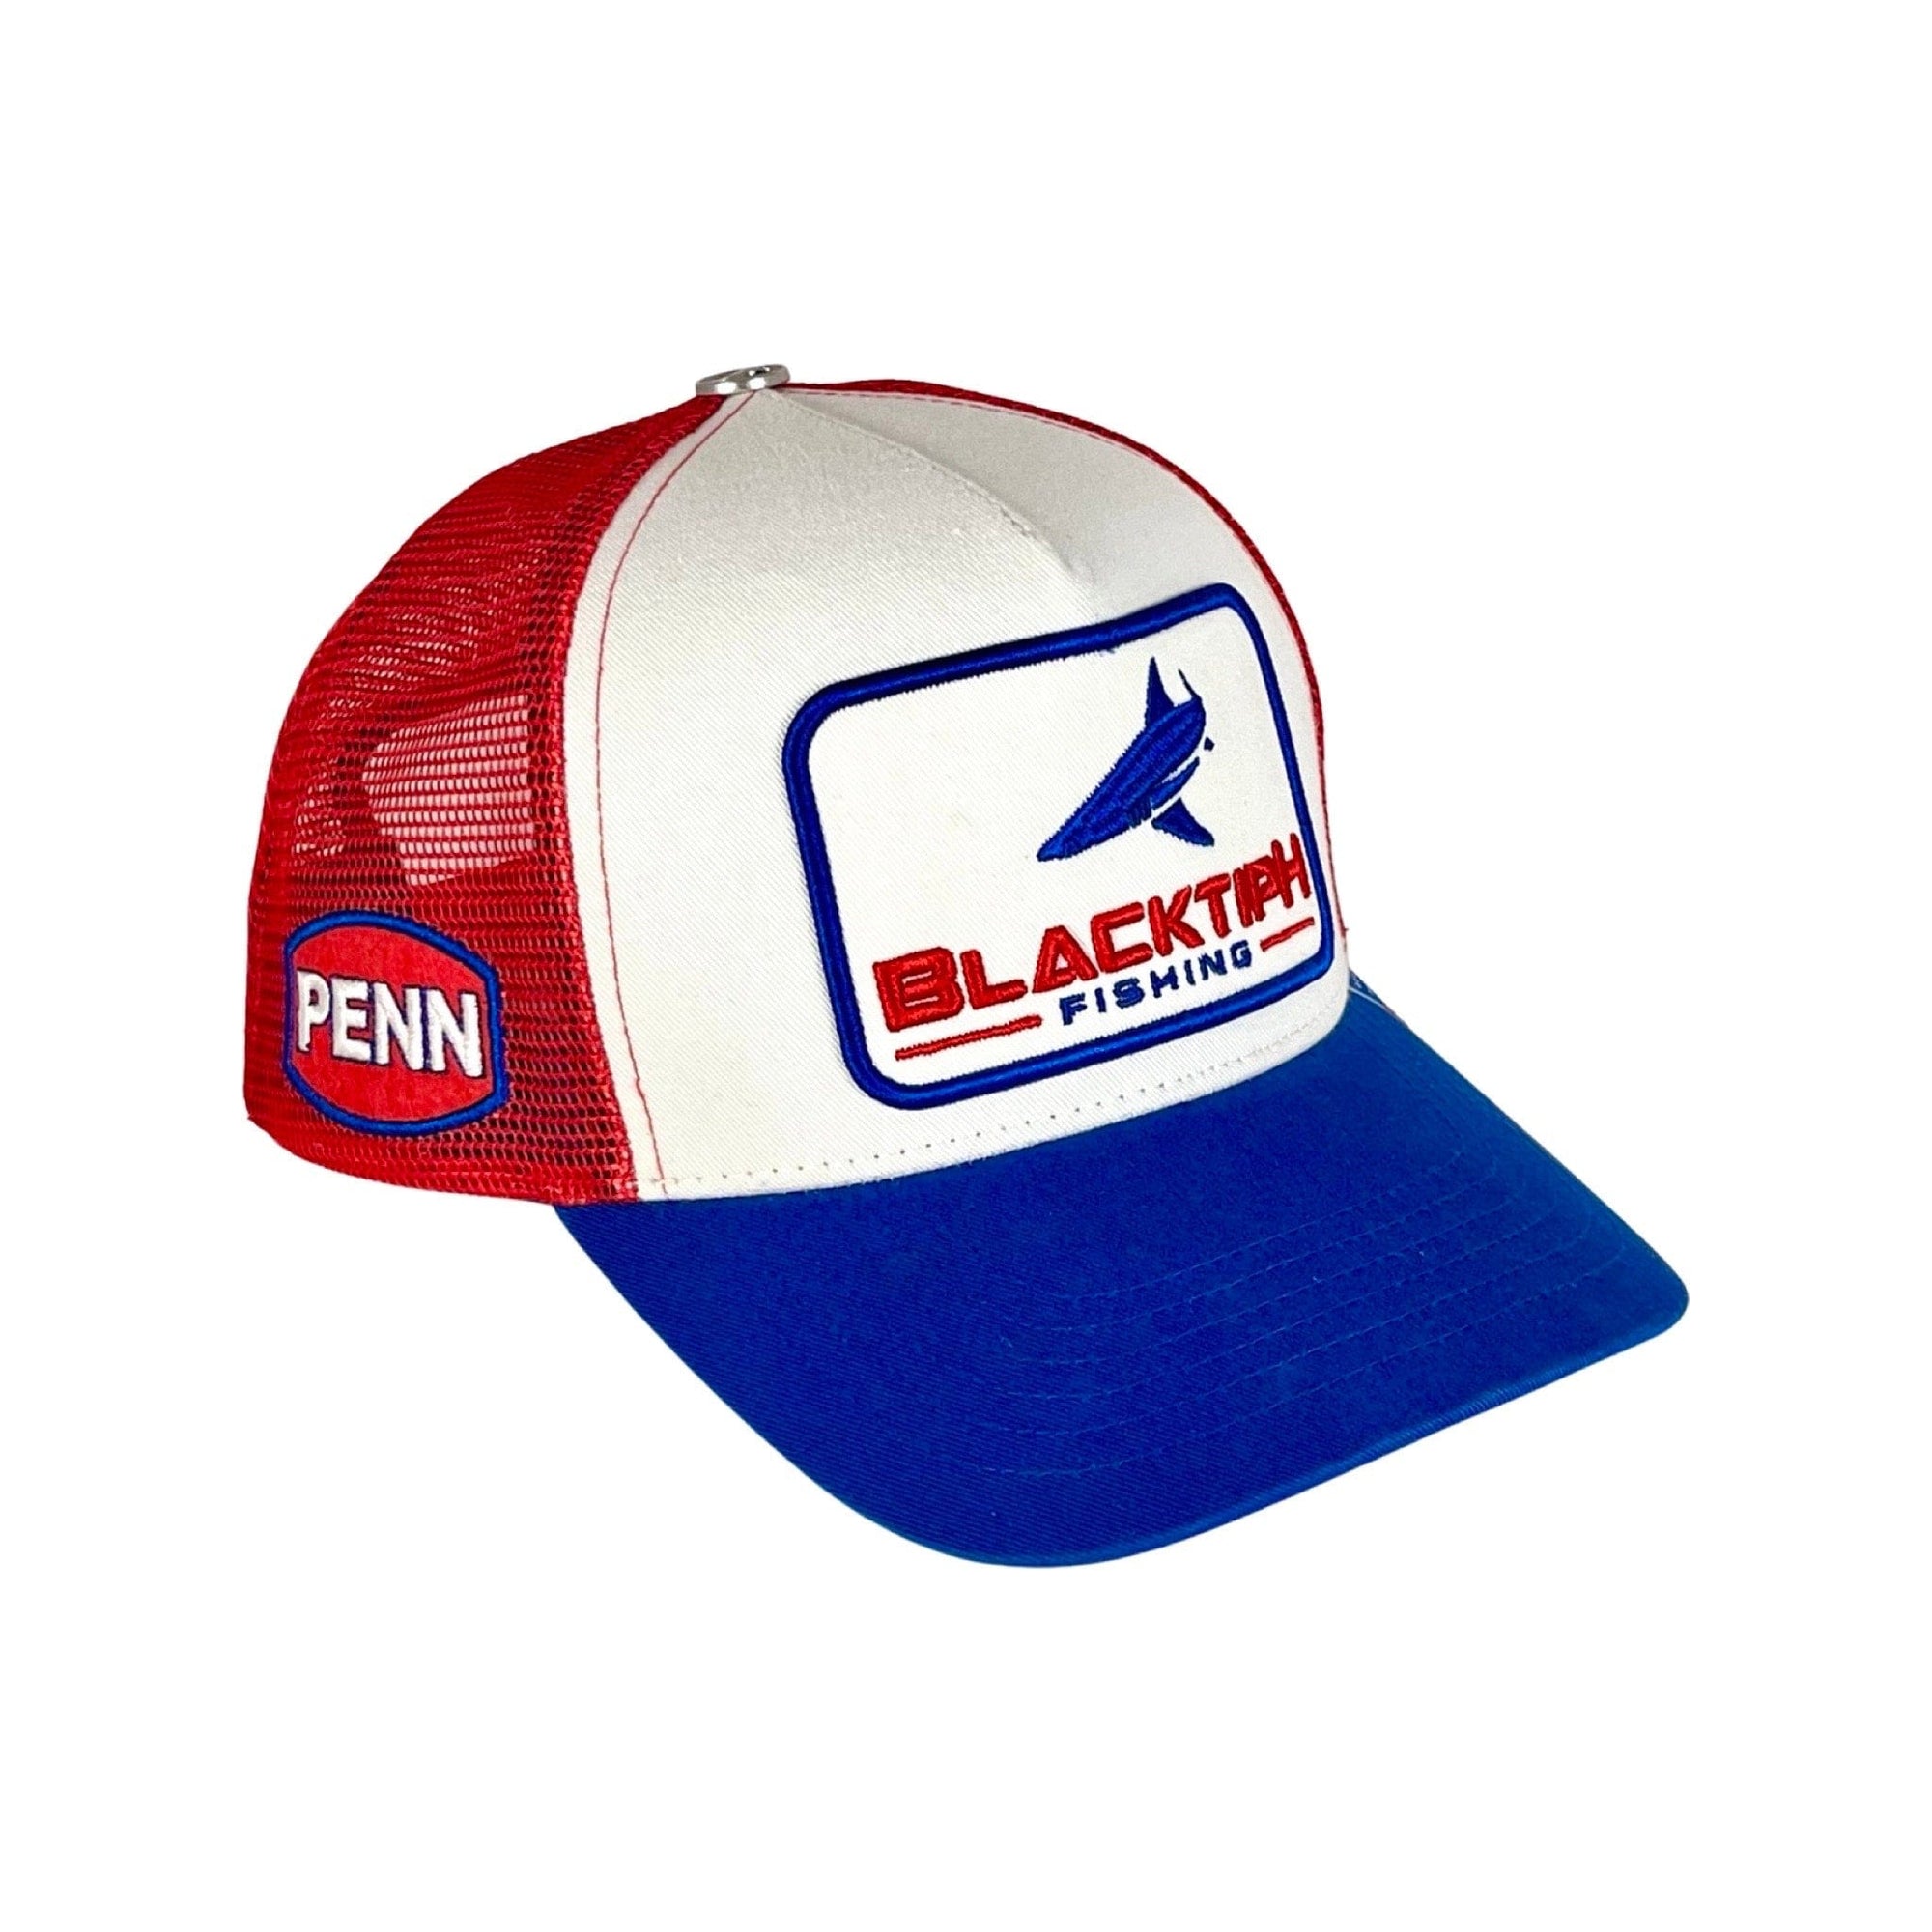 BlacktipH Hats BlacktipH PENN Retro Limited Edition Snapback 3.0